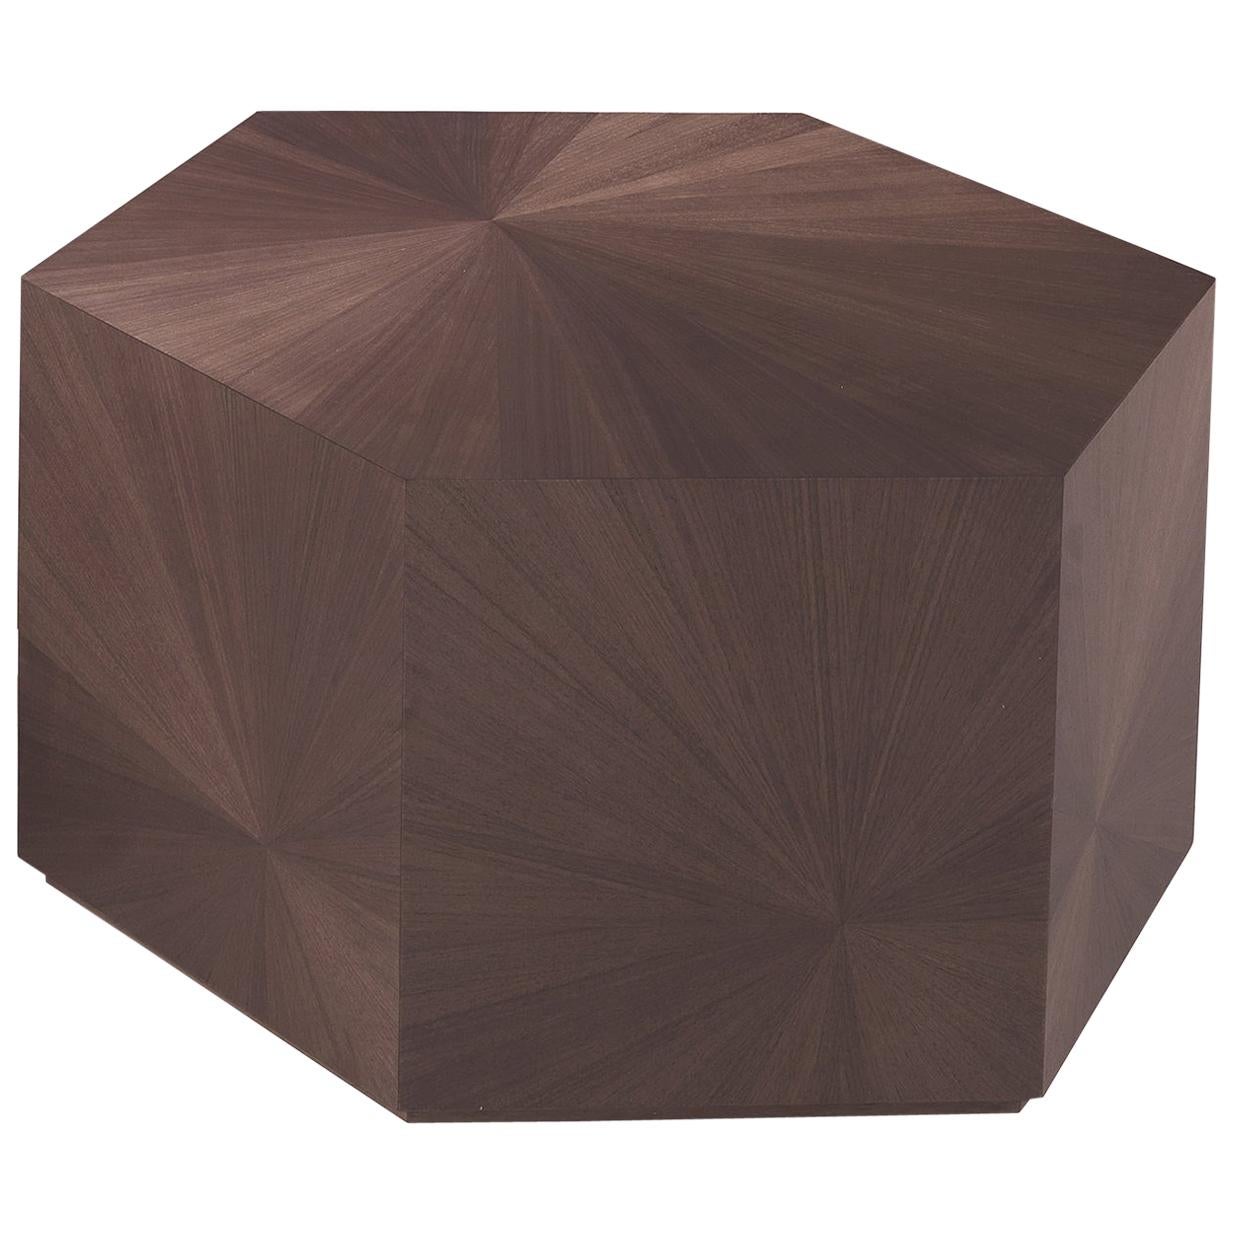 Brown Hexagonal Coffee Table